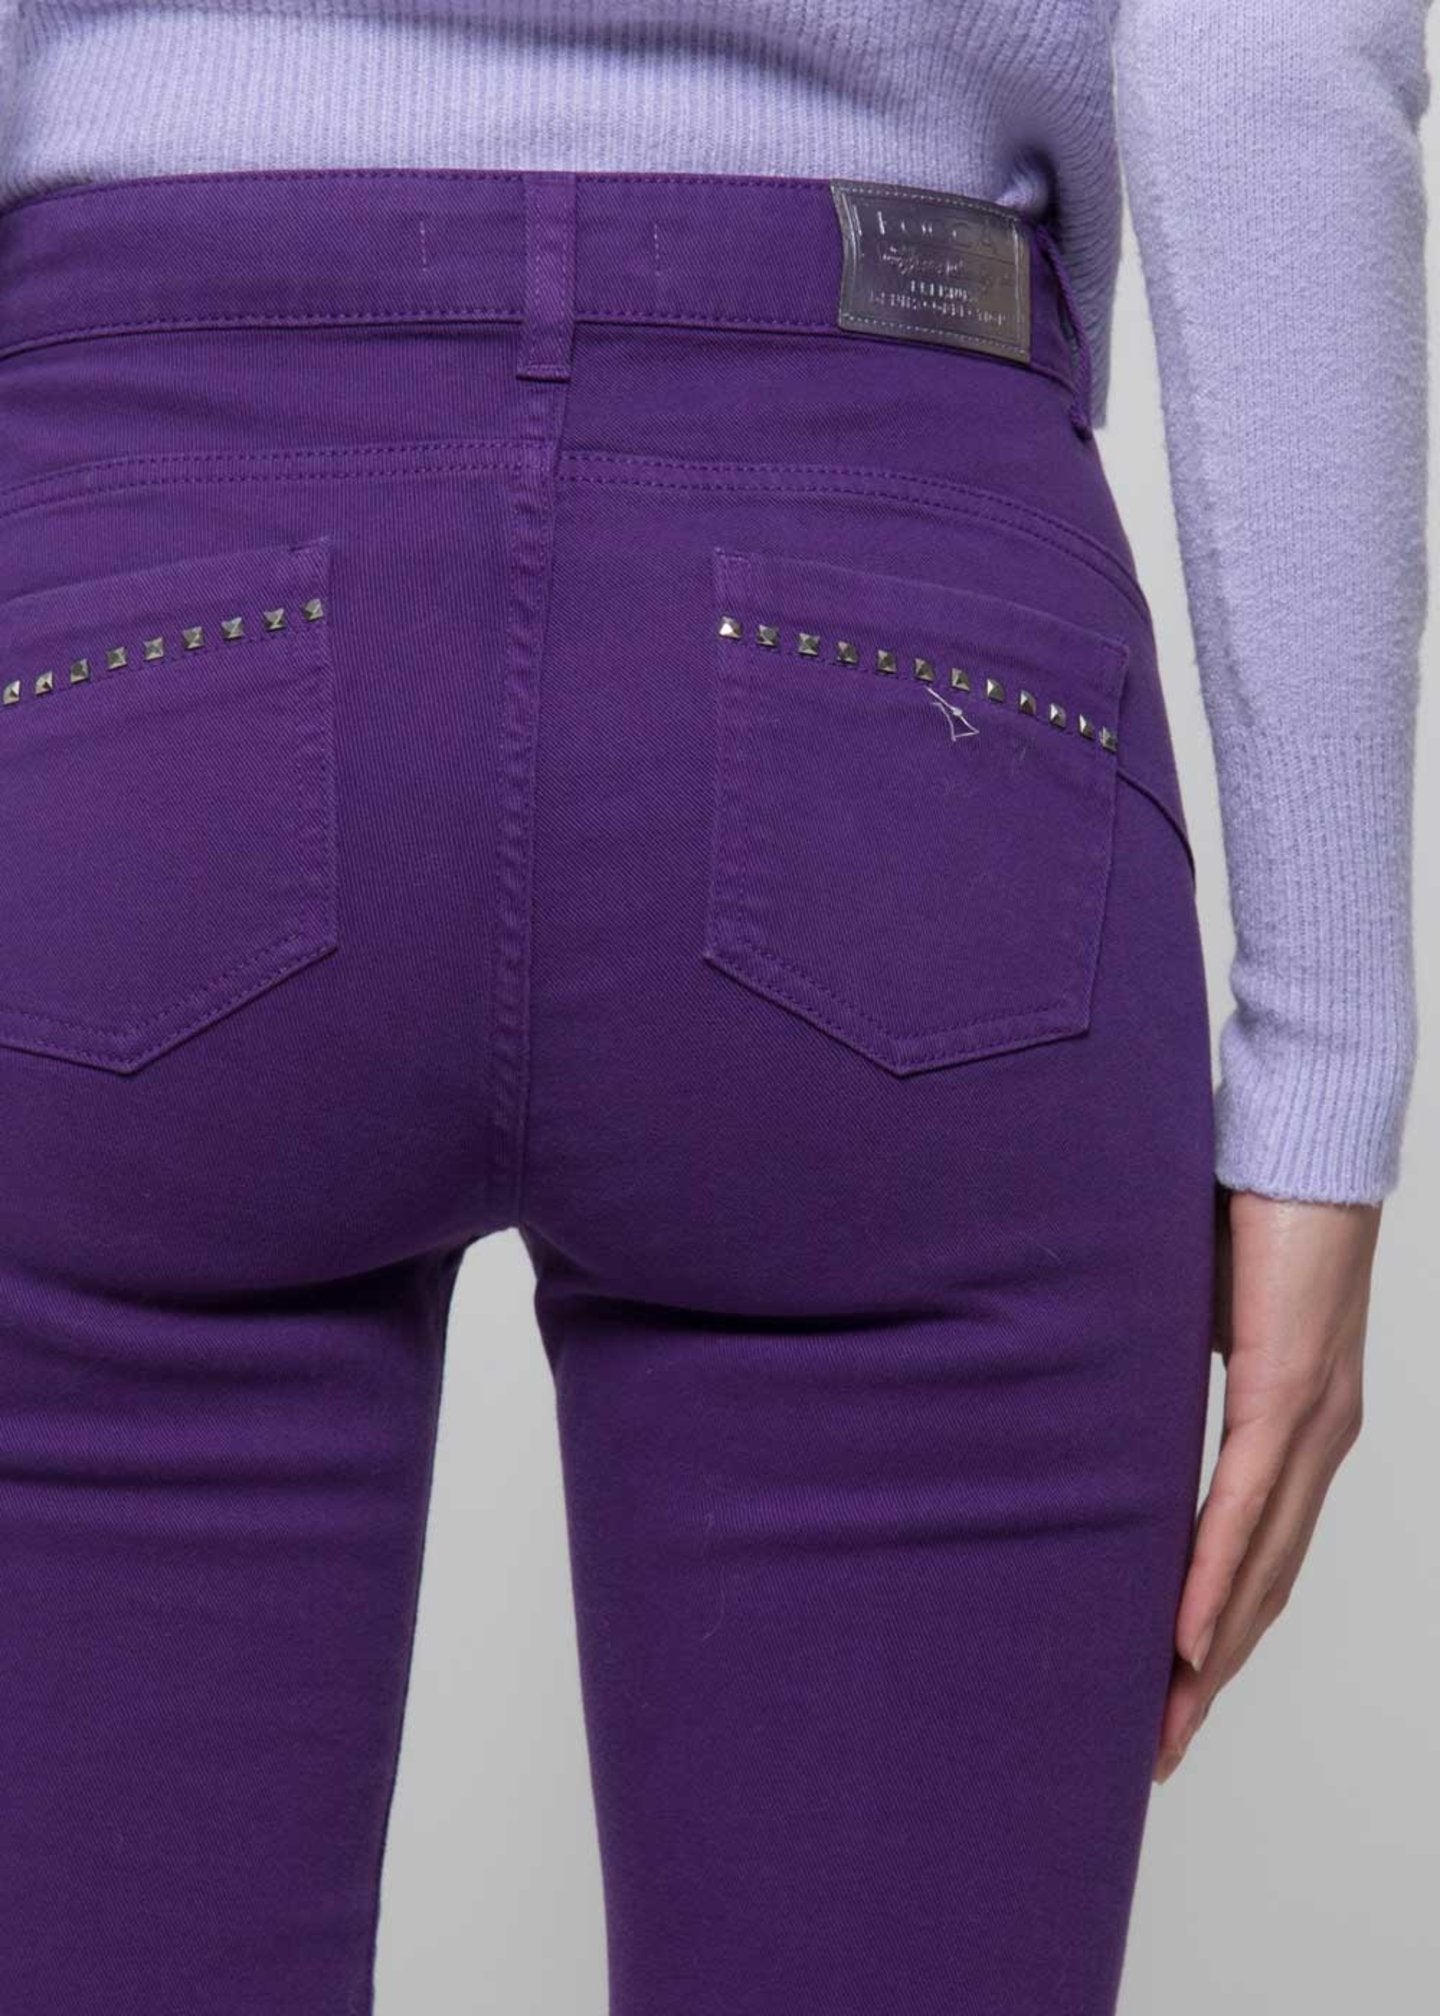 Pantalone Kocca / Viola - Ideal Moda